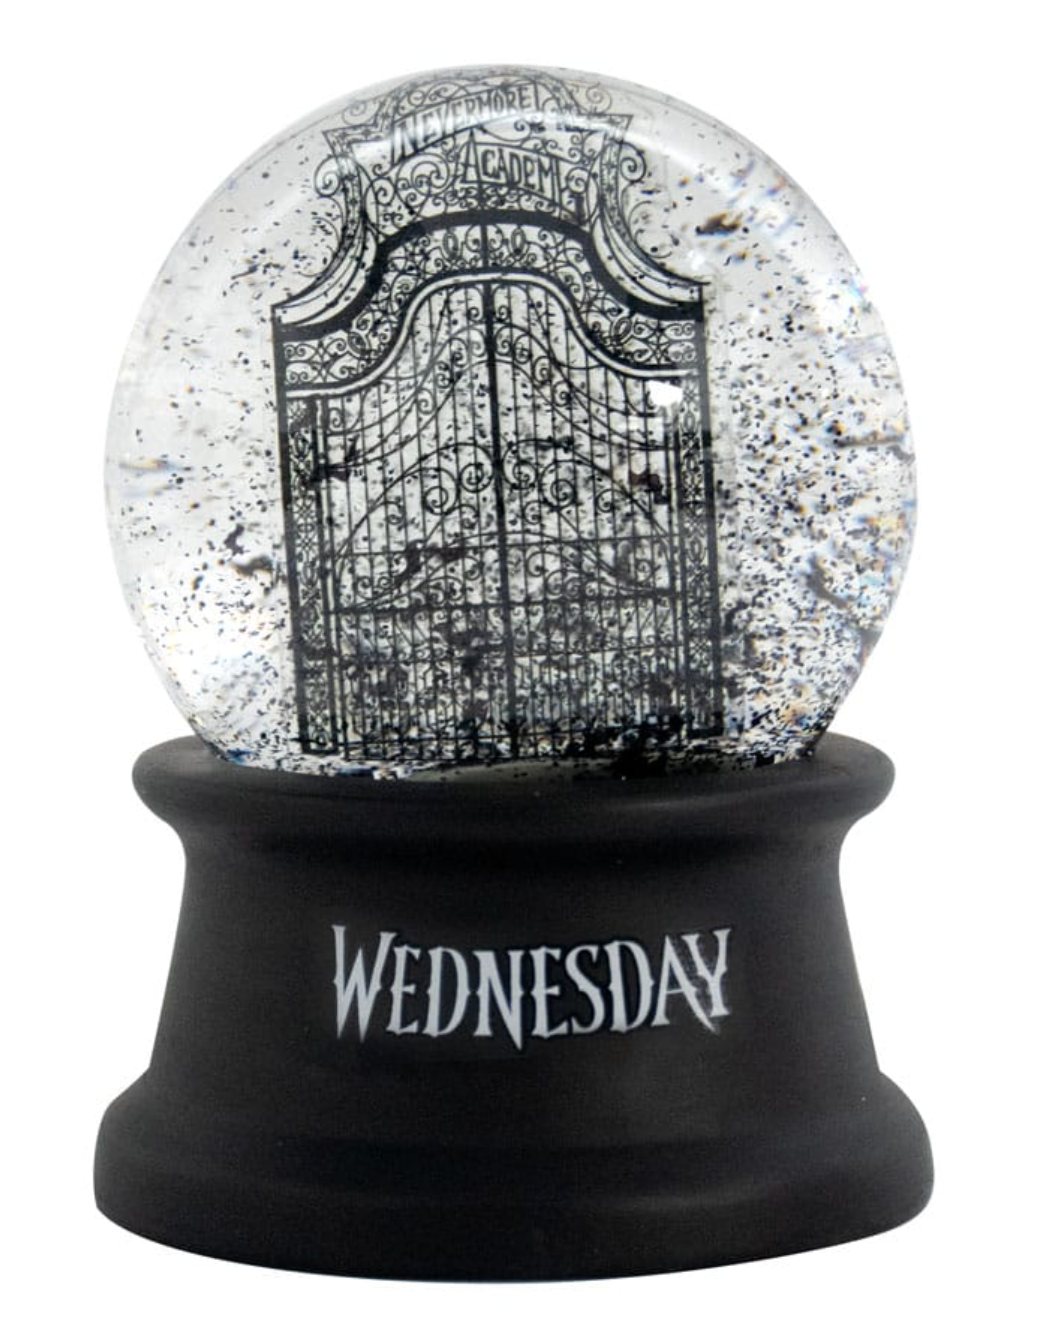 Official Wednesday (Netflix) Nevermore Academy Snow Globe